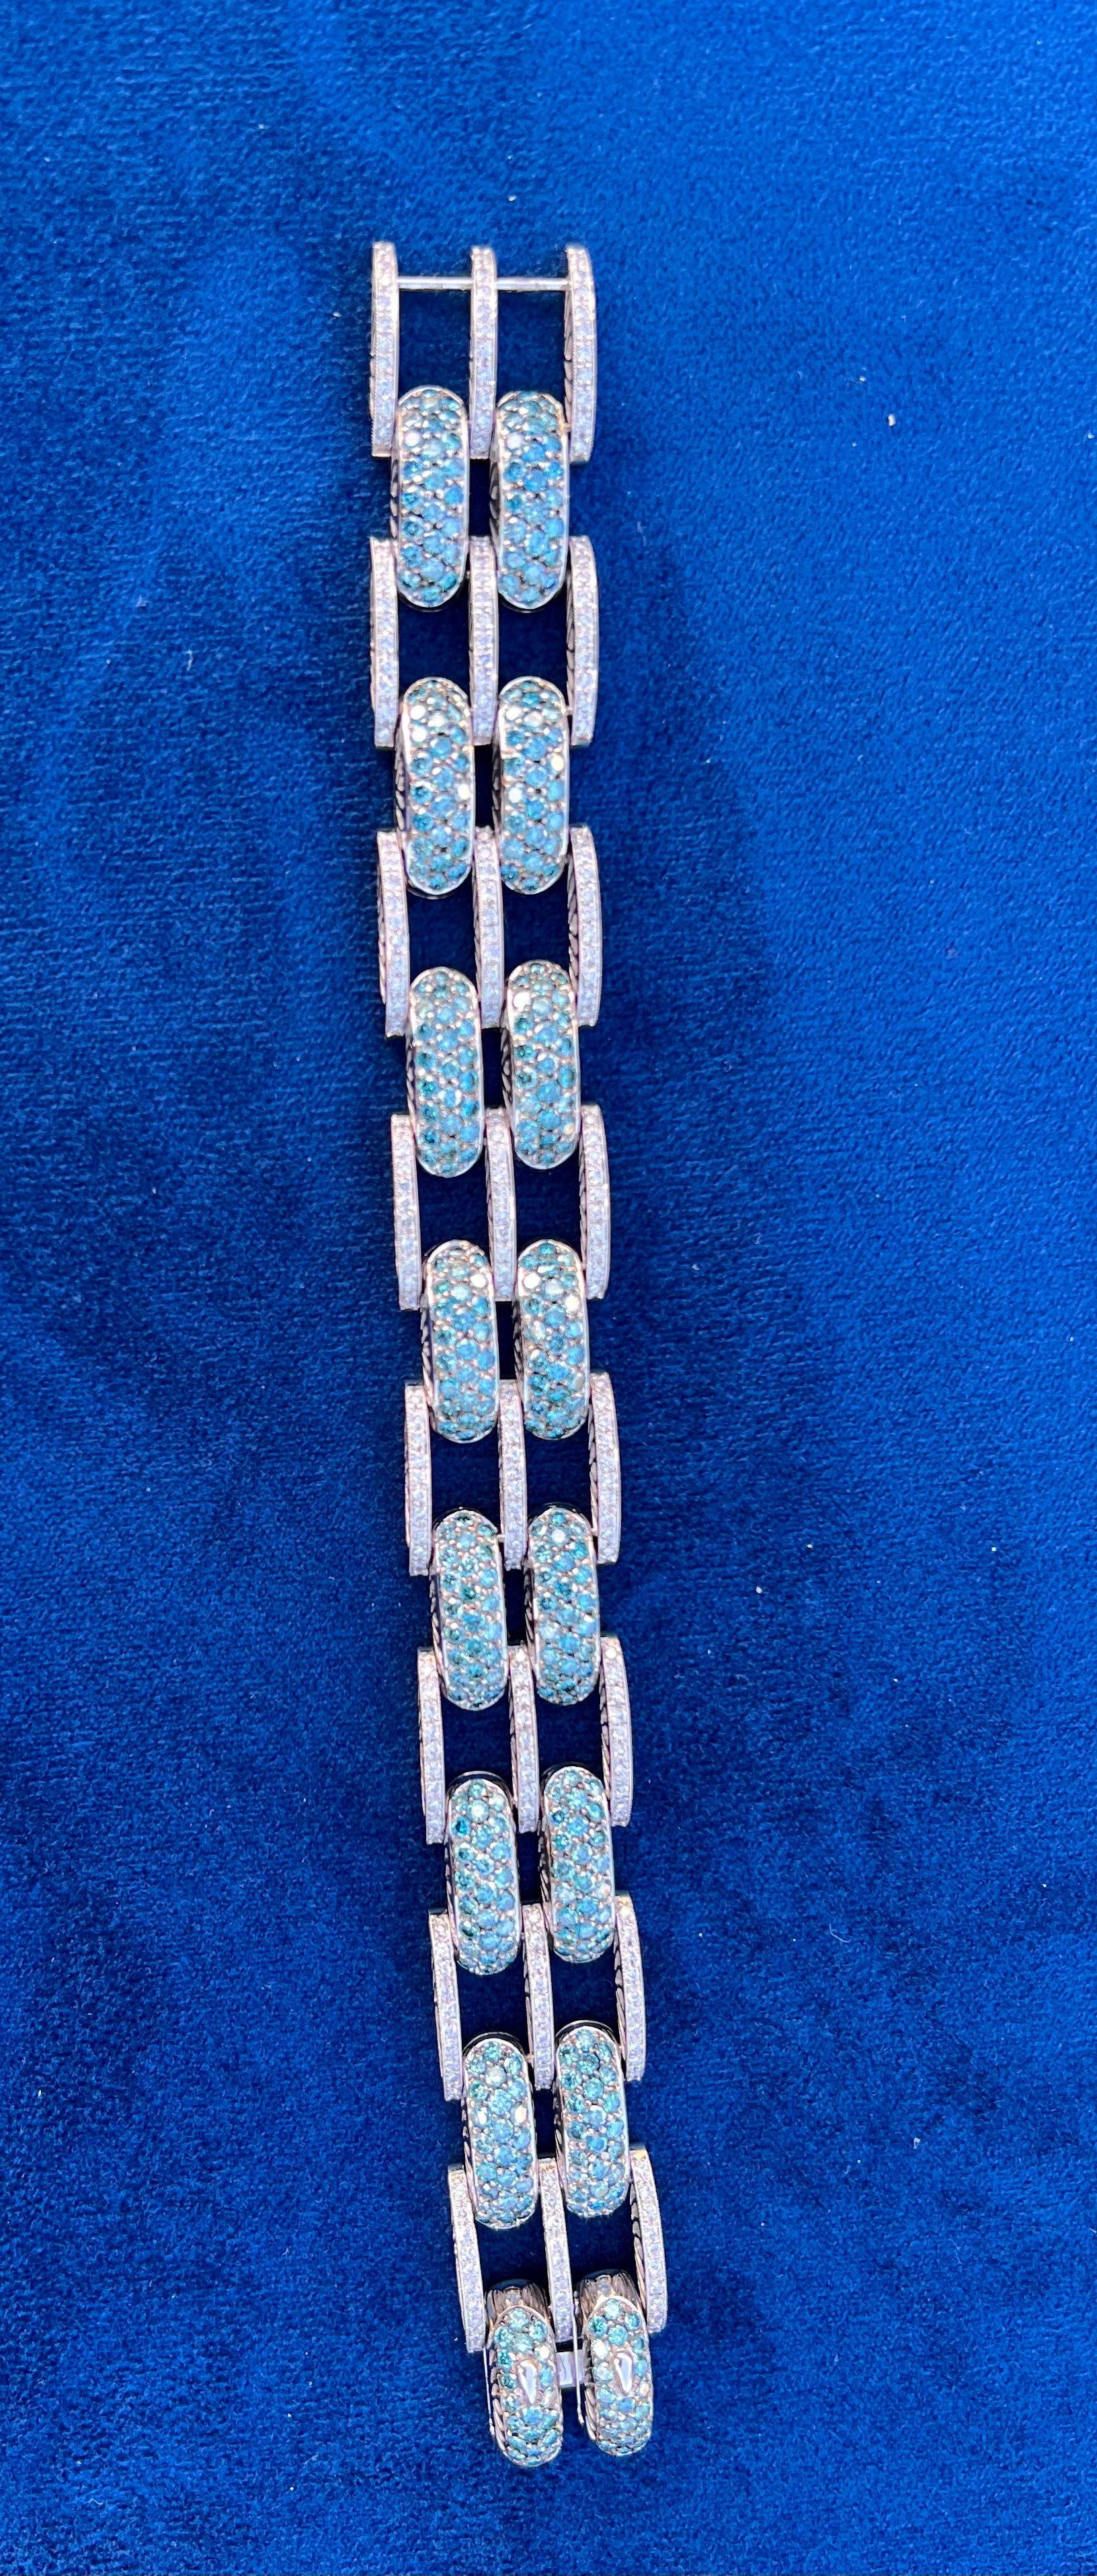 A very impressive 22 carat modern wide chain link 18 karat white gold estate bracelet features sparkling fancy blue round brilliant diamonds and round brilliant white diamonds. The contrast between the two diamond colors is very striking!  Bracelet